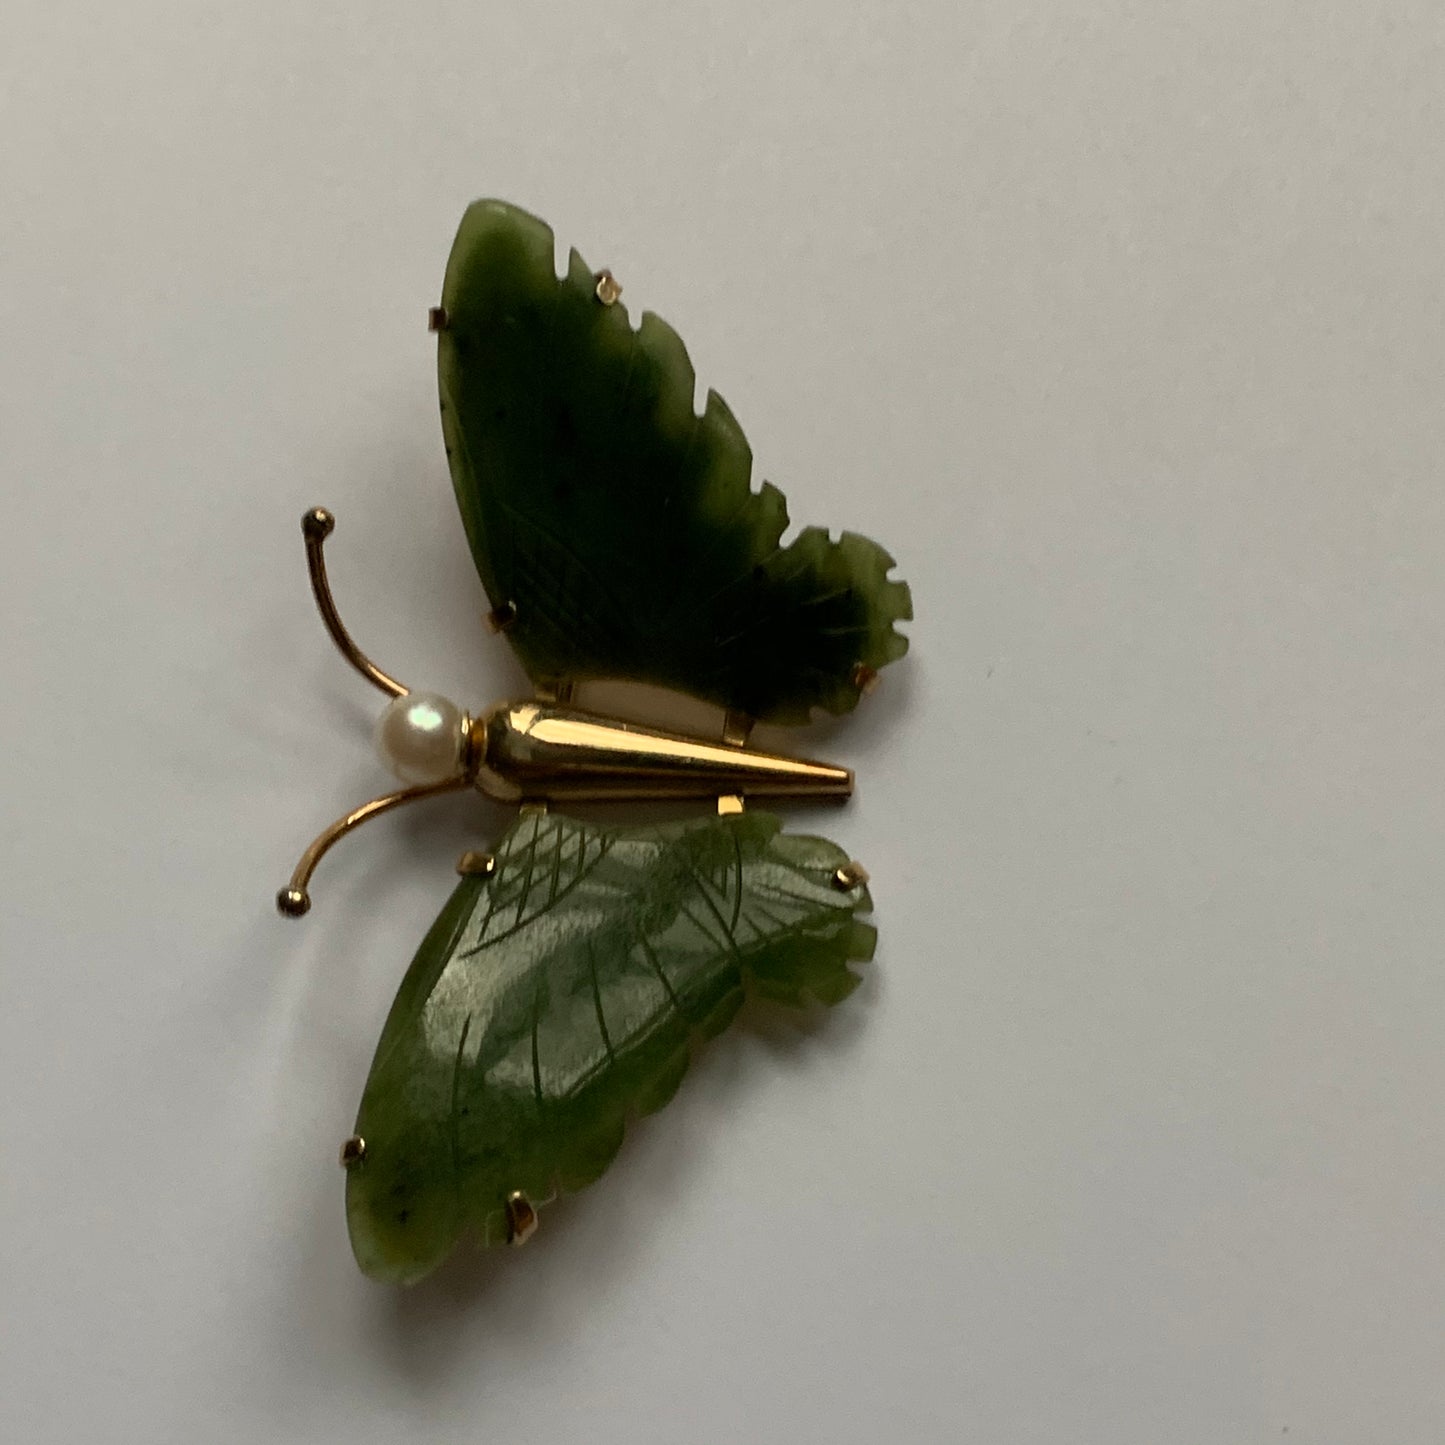 Nephrite jade butterfly brooch